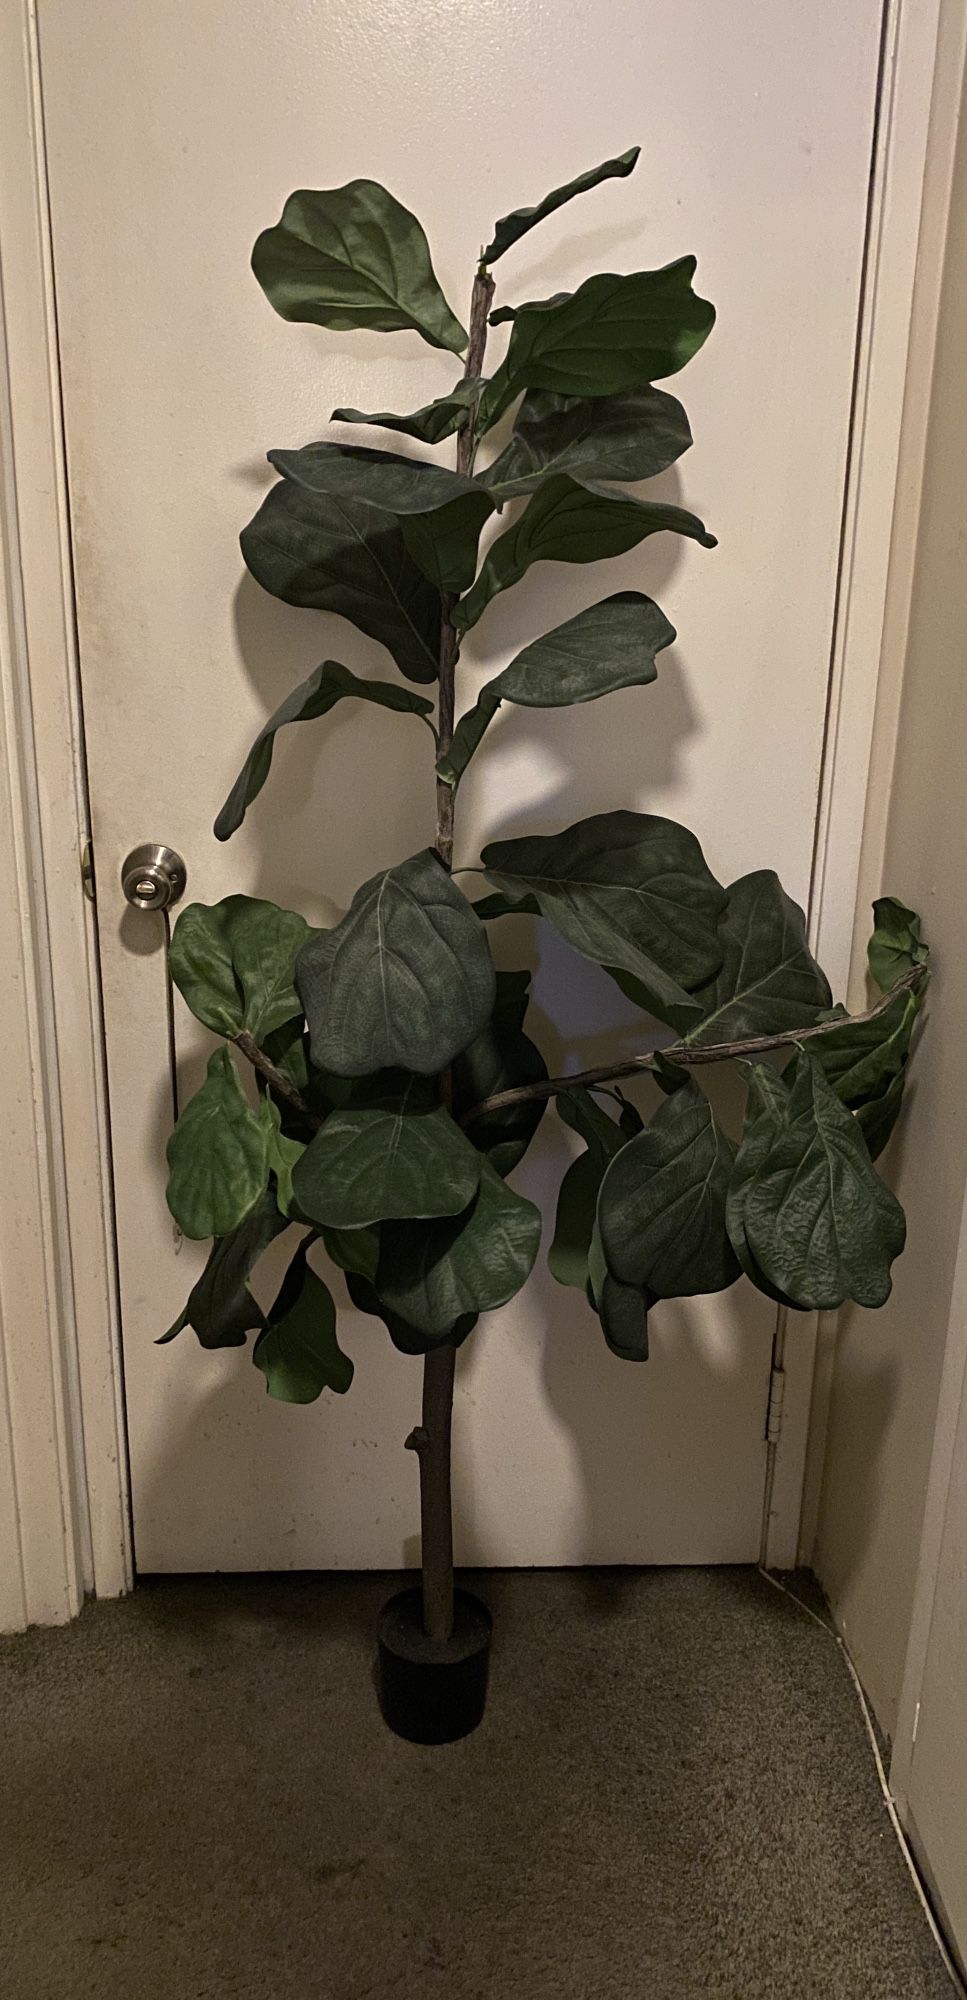 5’ Tall Fake Plant 